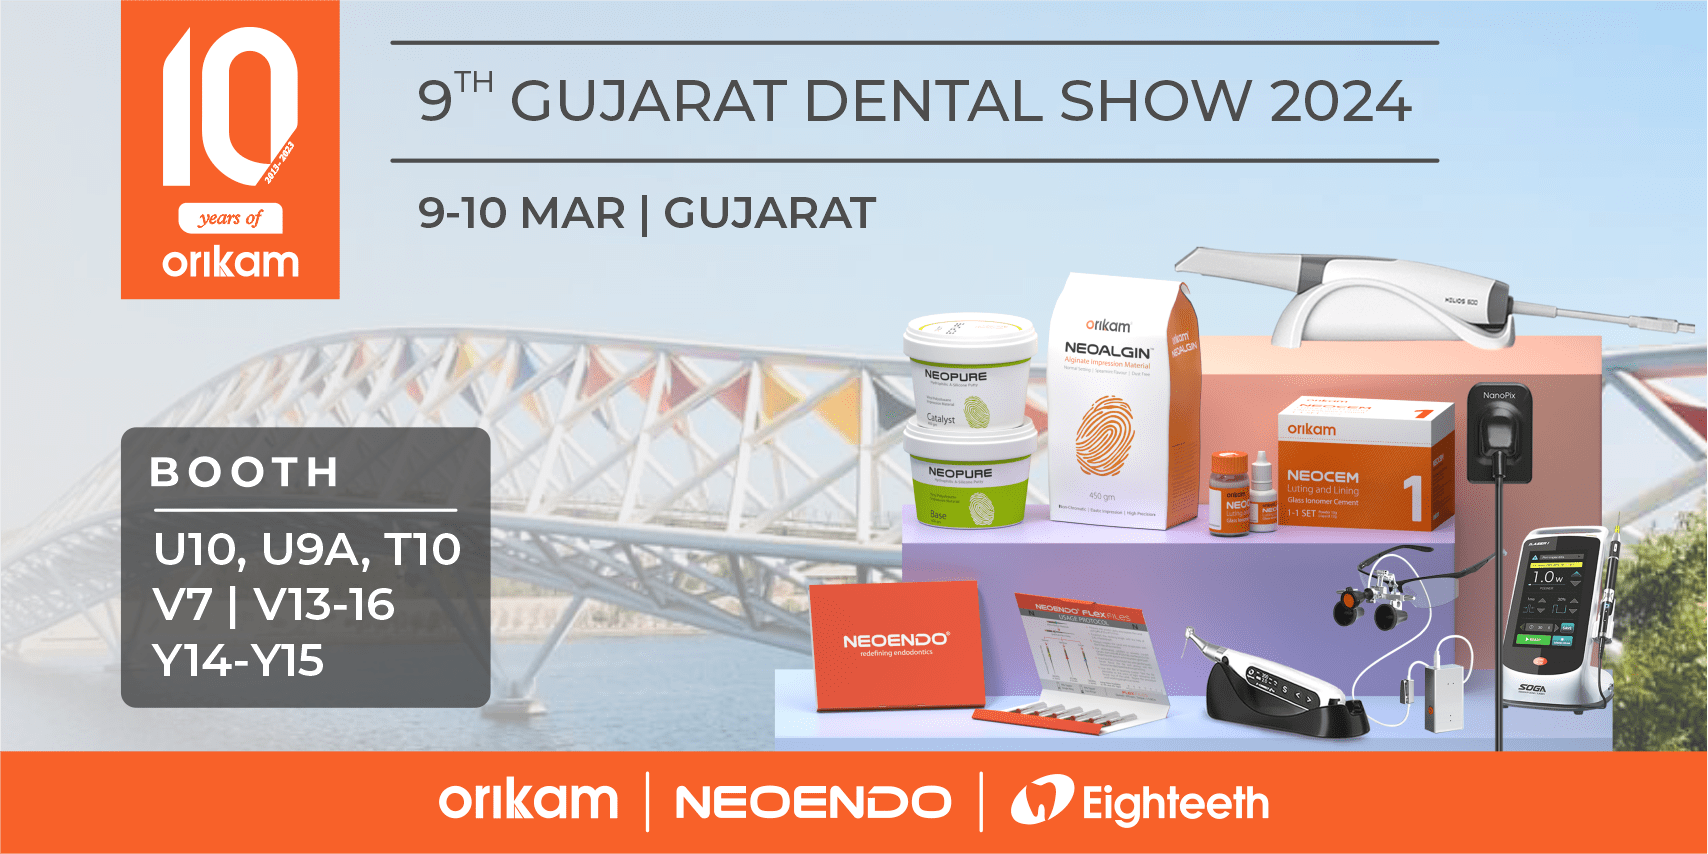 Gujarat Dental Show 2024